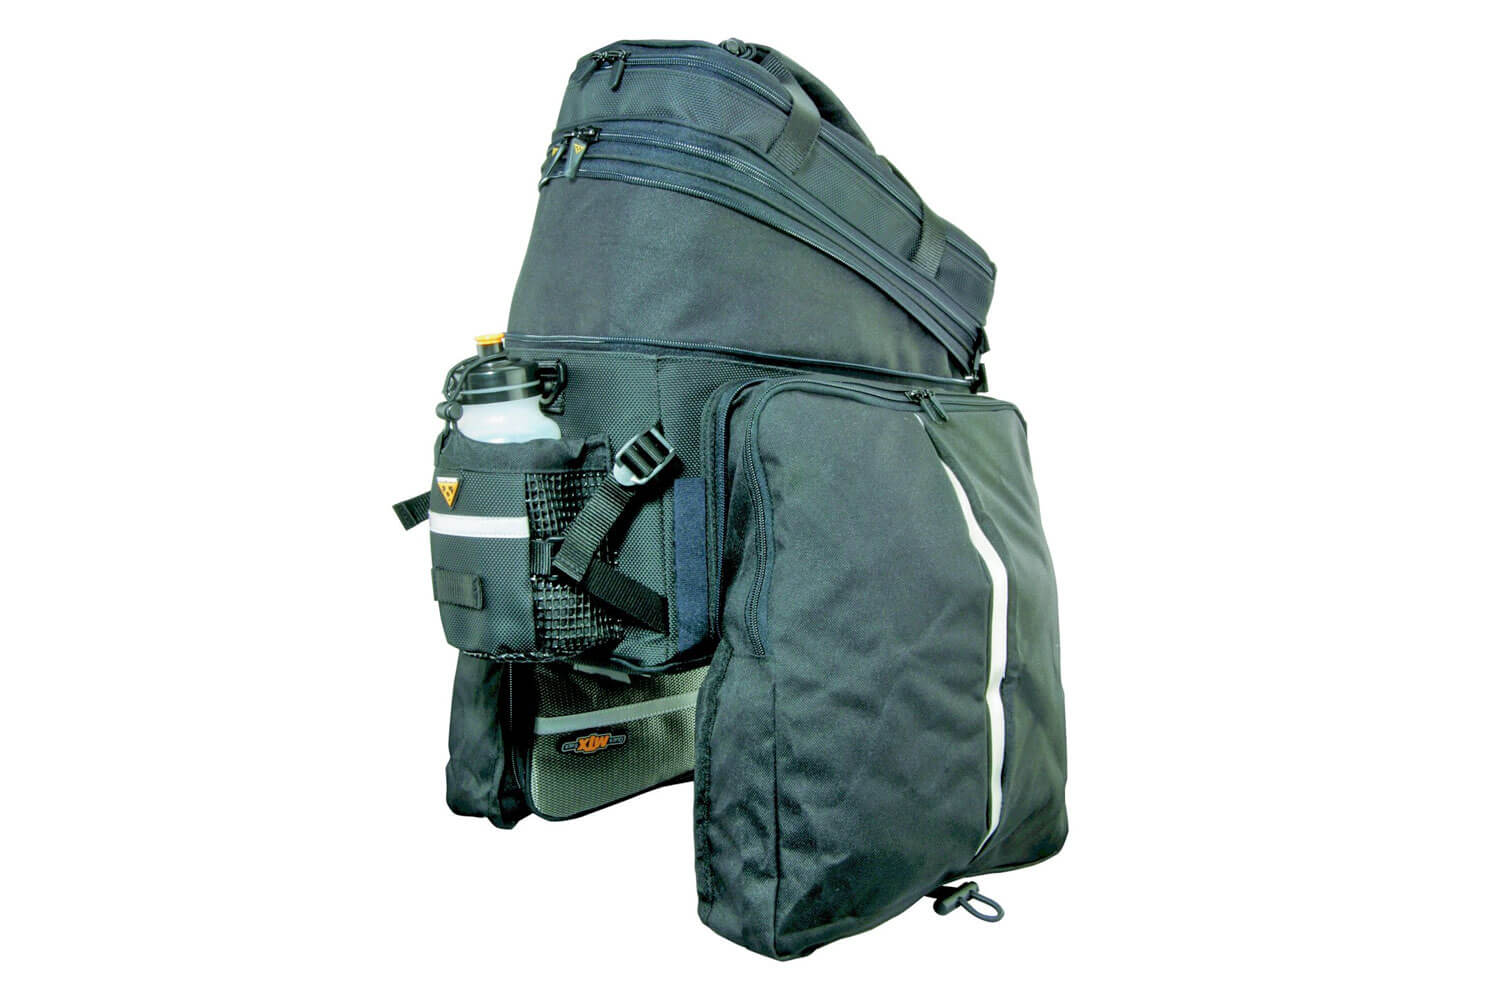 Topeak Gepäckträgertasche MTX Trunk Bag DXP, Black, 36 x 25 x 29 cm, 22.6 Liter